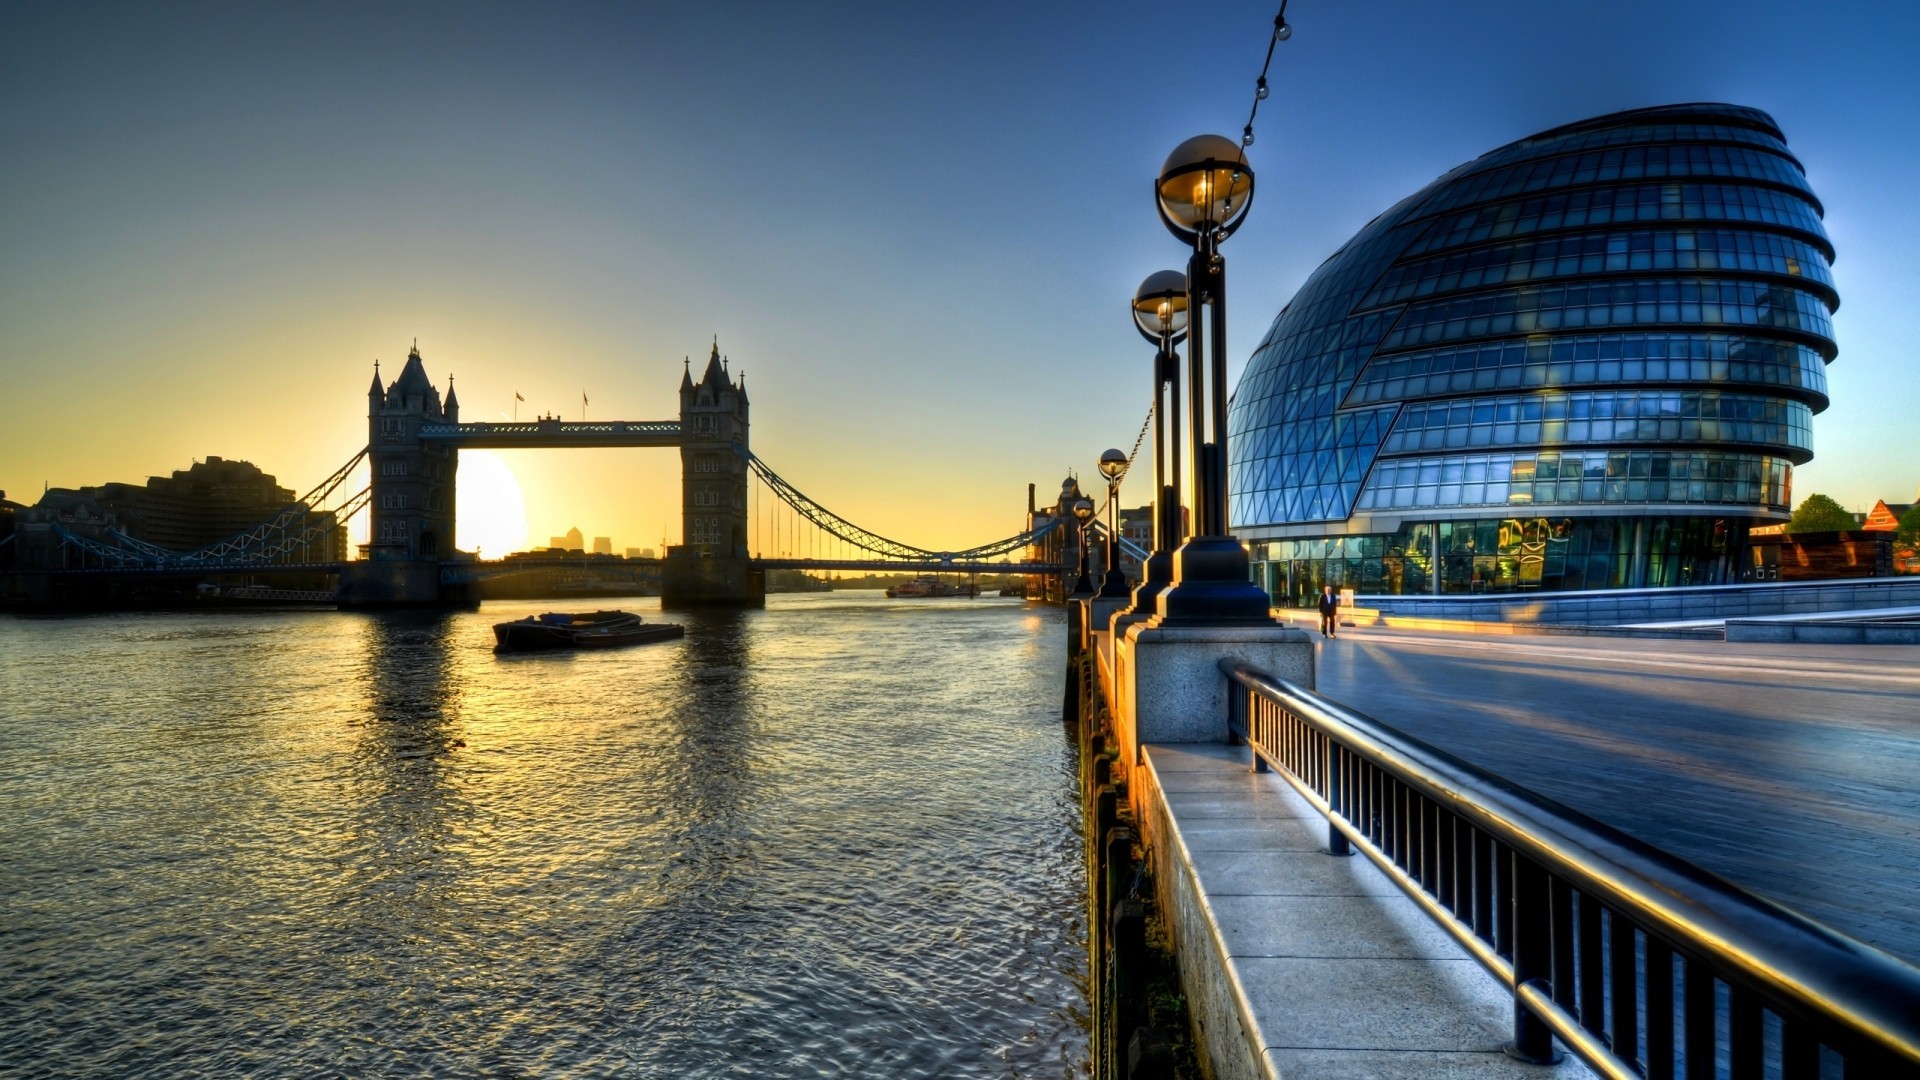 fantastic architecture london city uk free images download